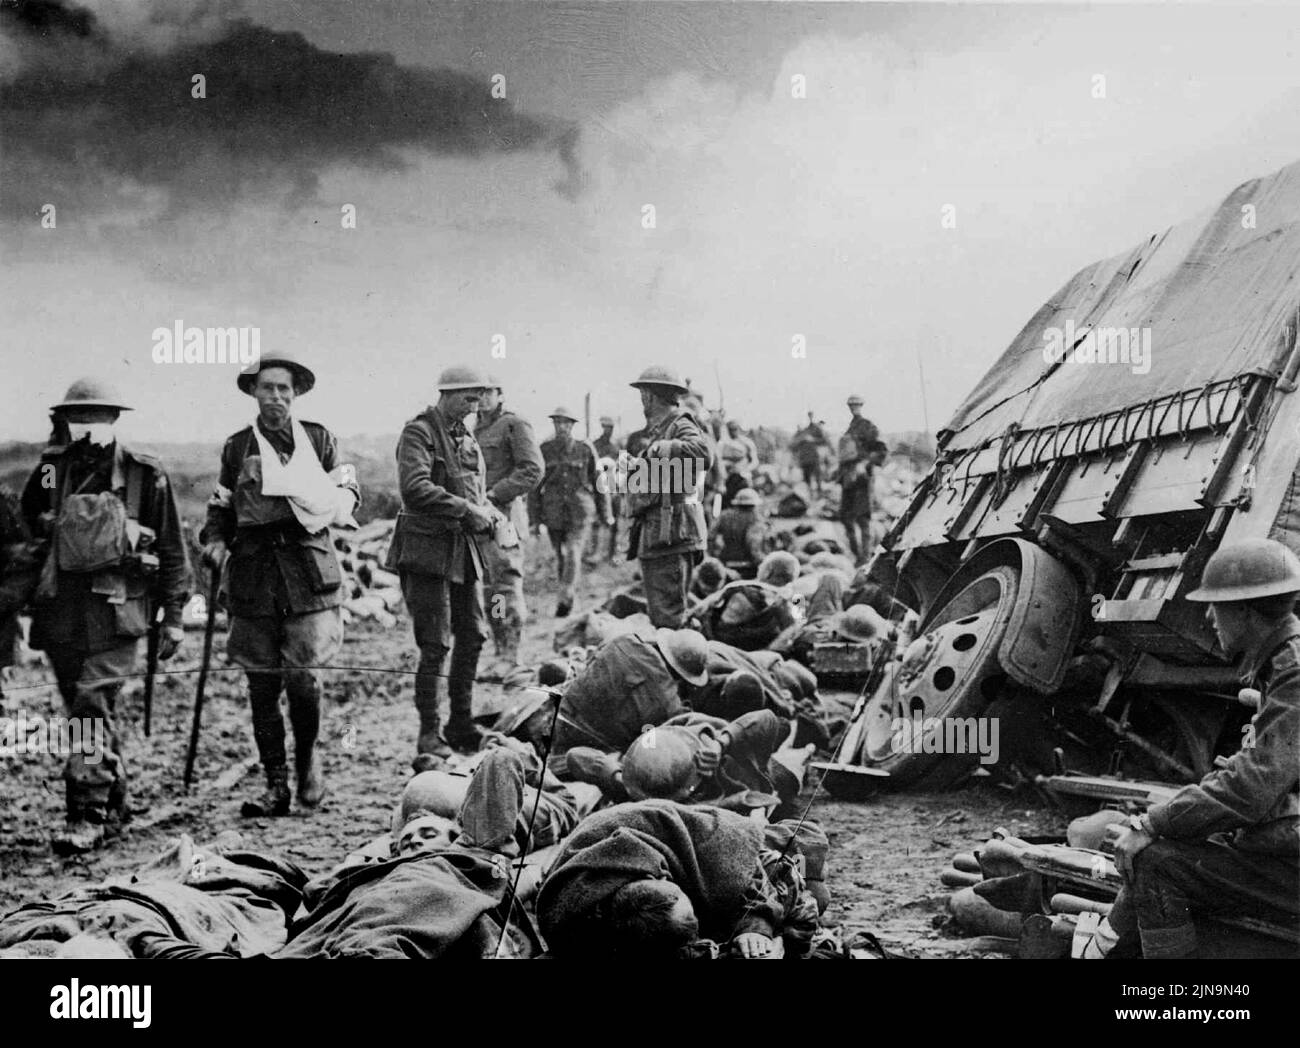 MENIN ROAD, BÉLGICA - 20 de septiembre de 1917 - Batalla de Menin Road. El ejército australiano herido en la carretera Menin, cerca de Birr Cross Road en el frente occidental i. Foto de stock